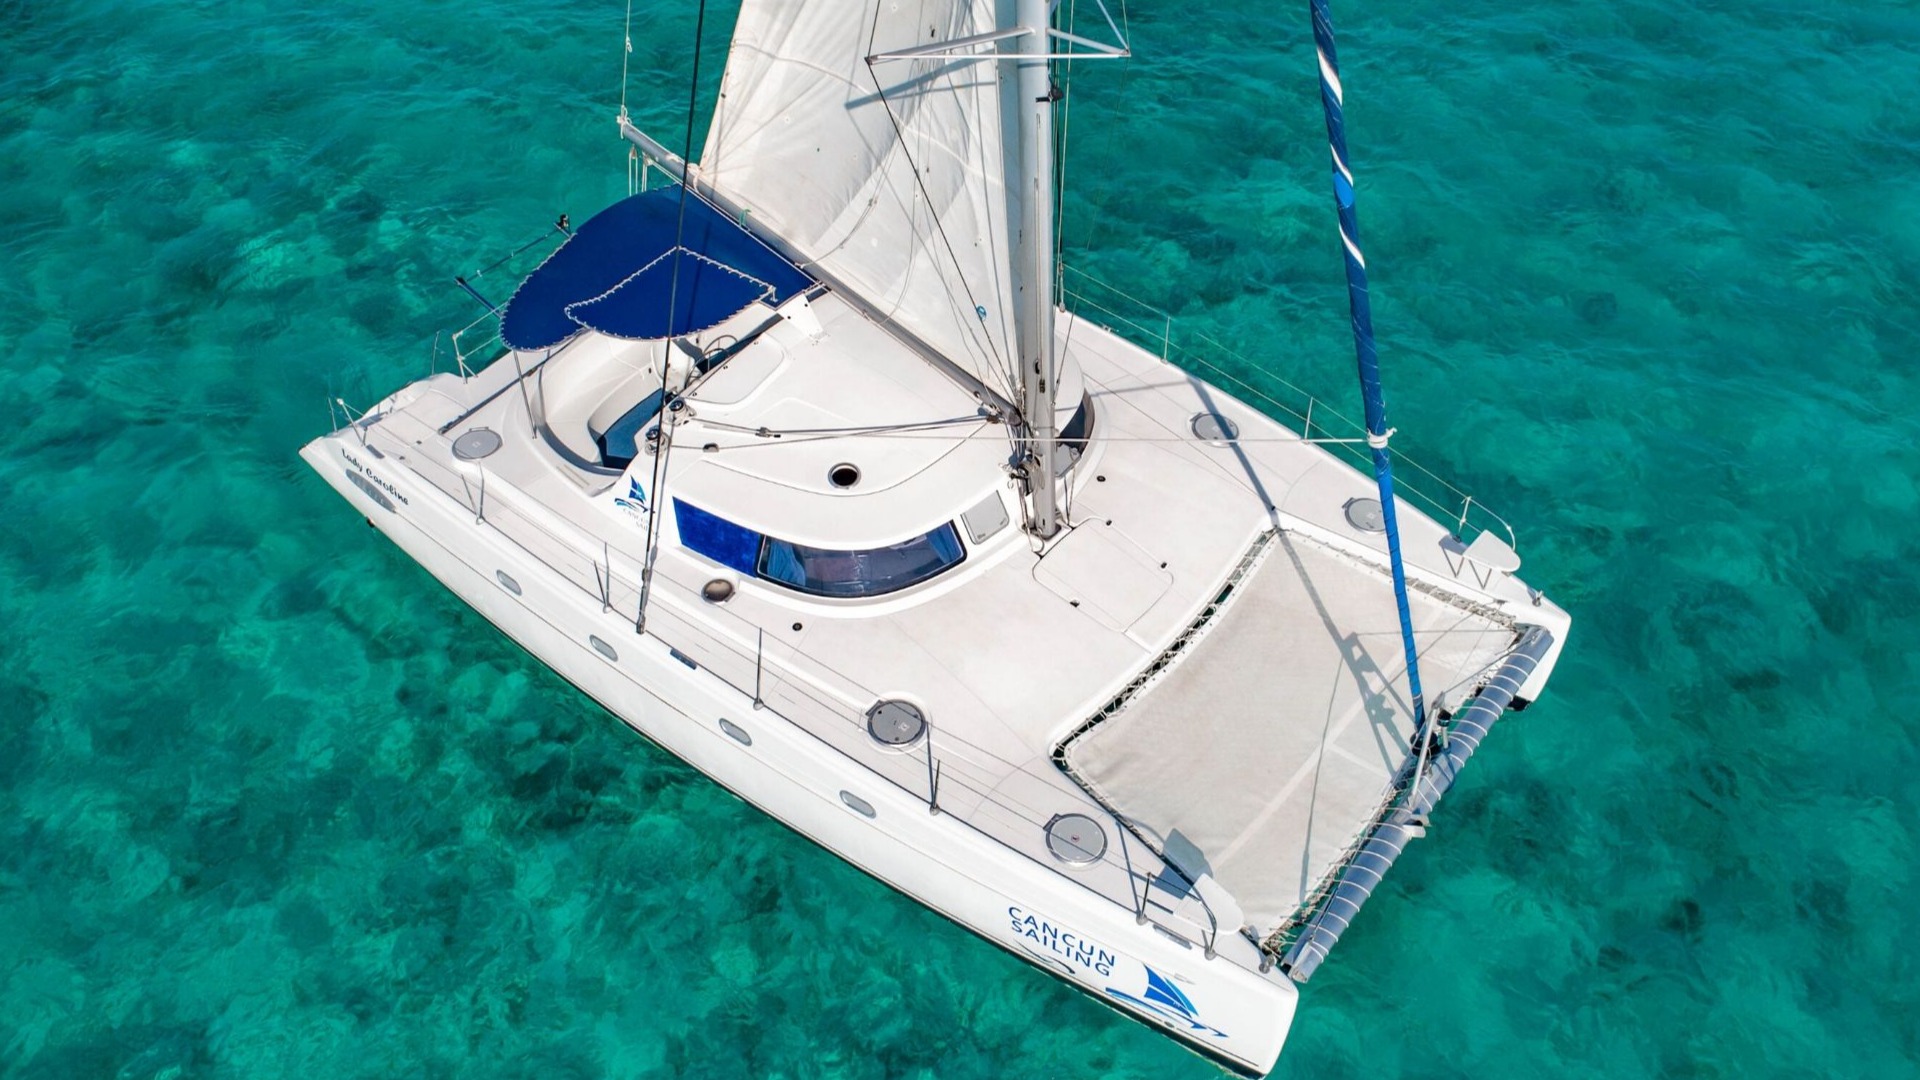 Lady Caroline - Isla Mujeres Catamaran Tour - Cancun Sailing